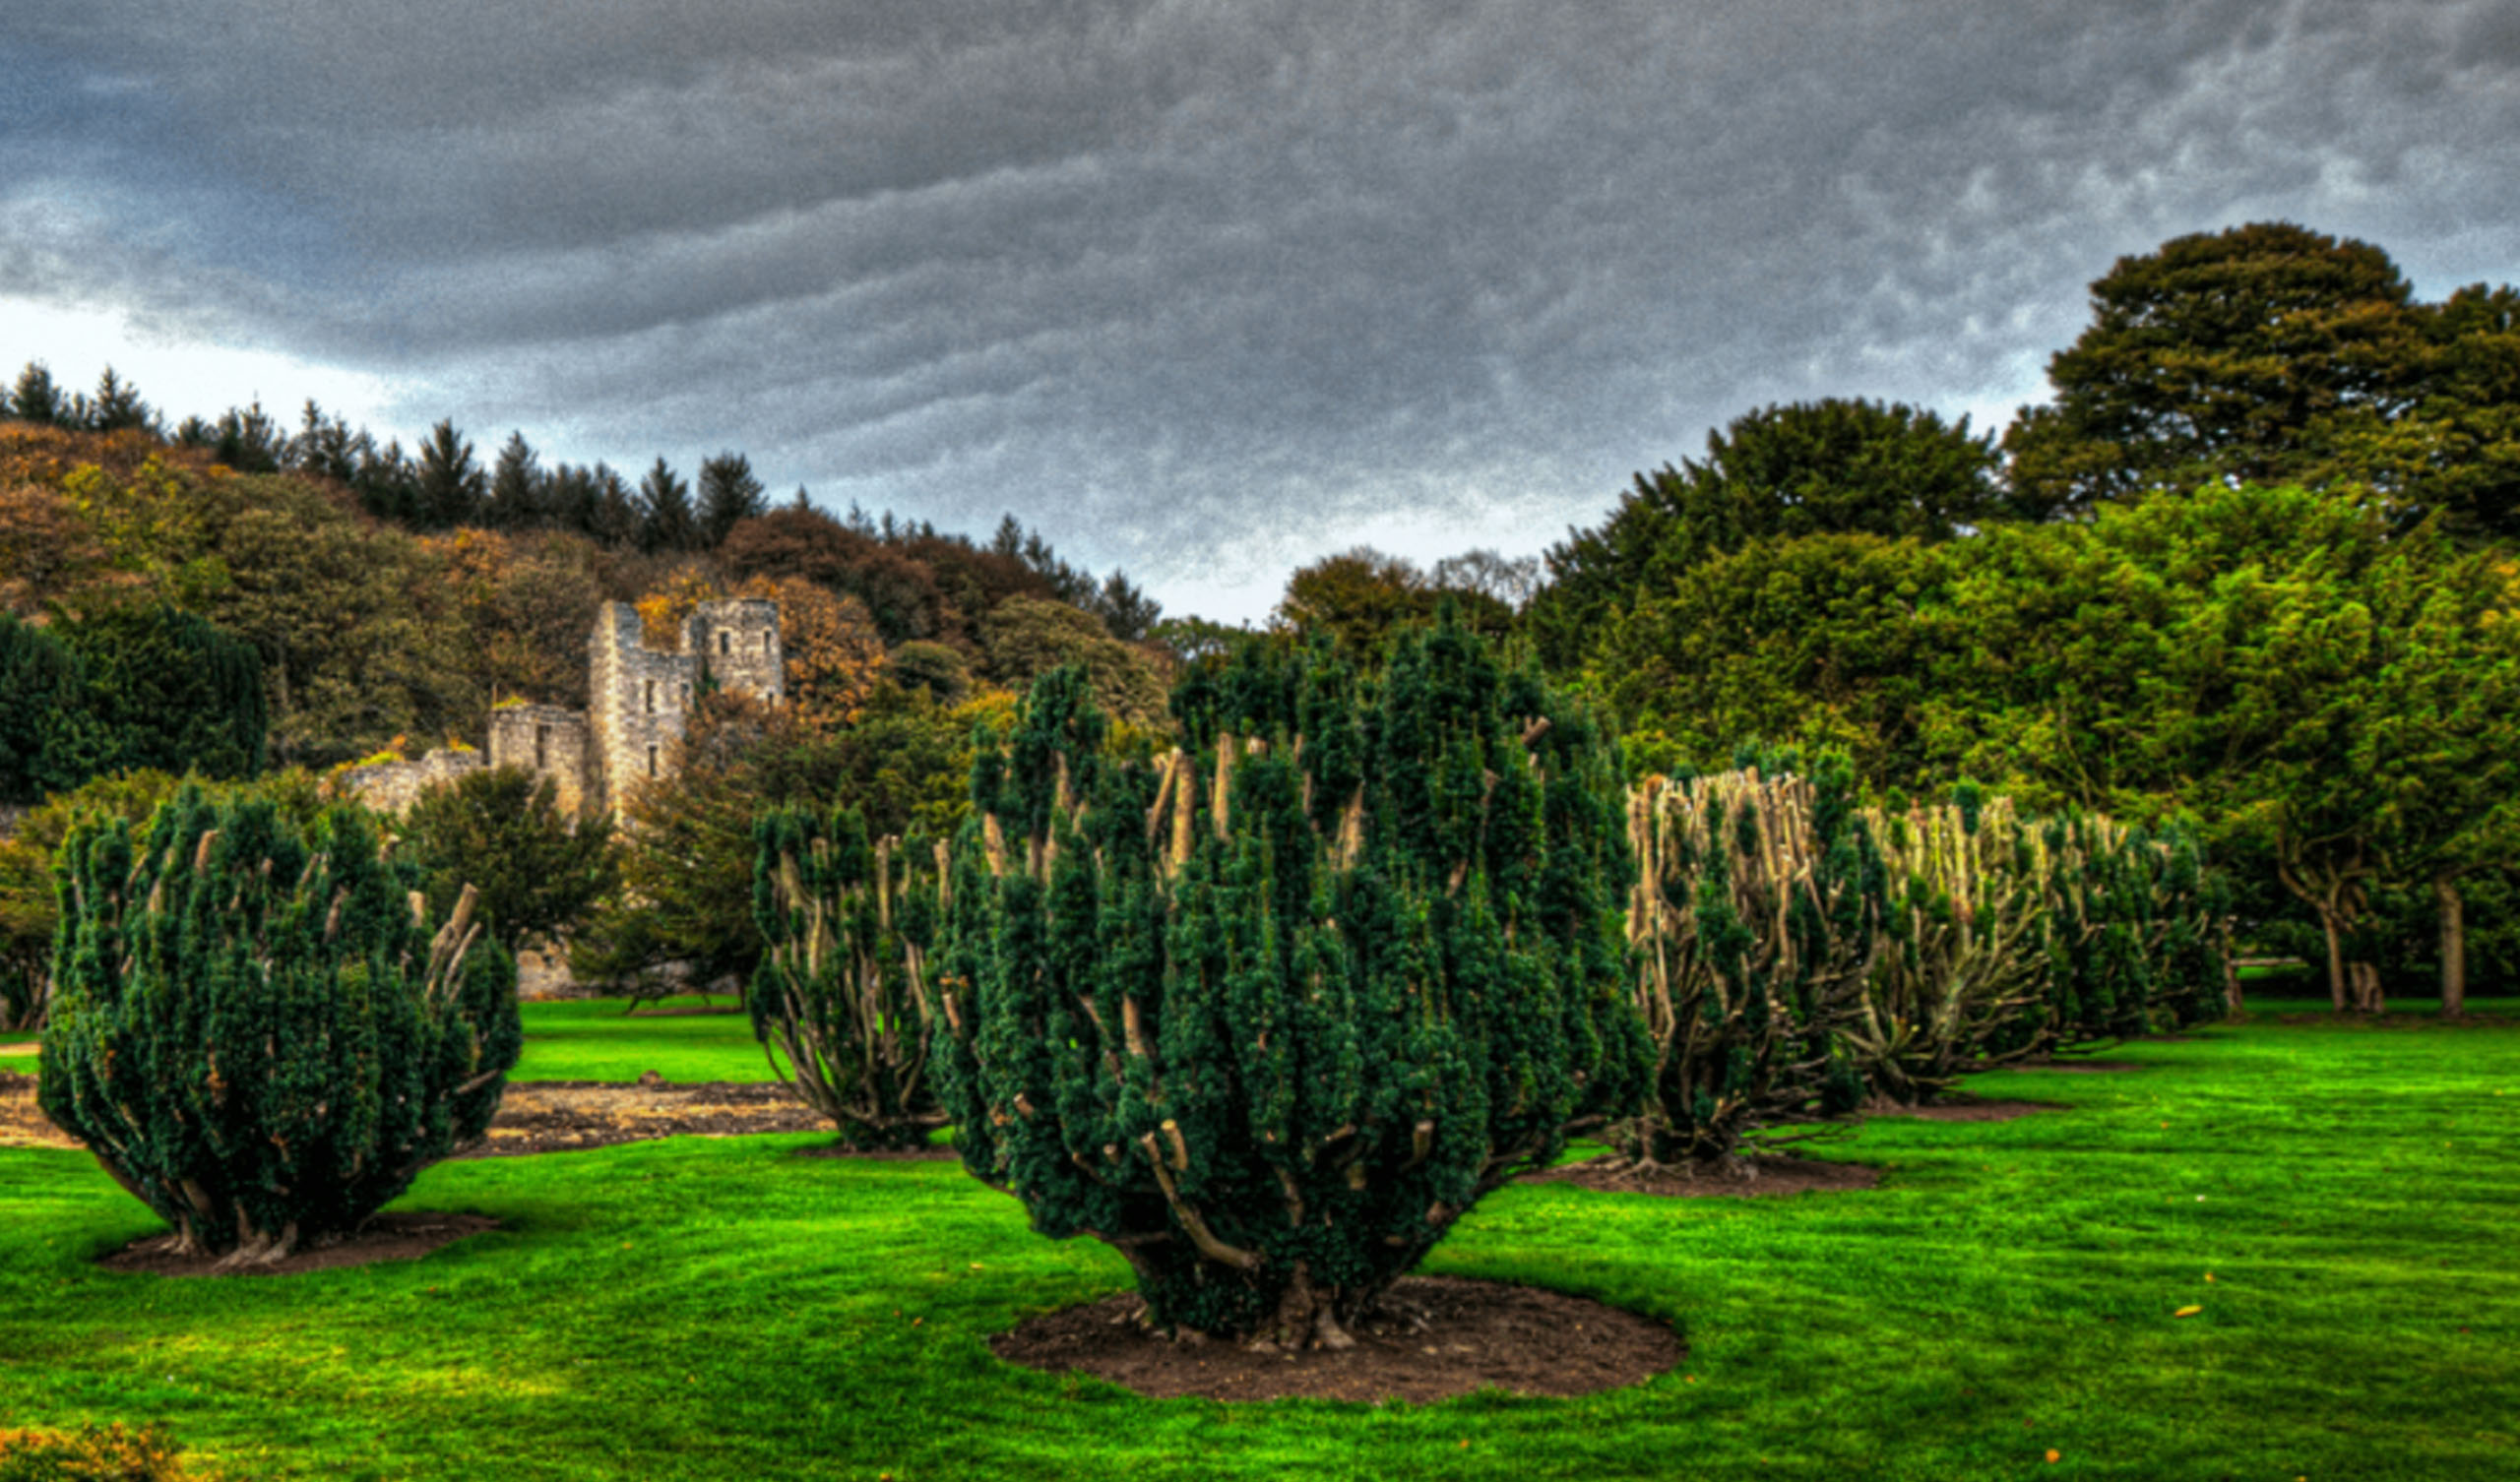 Photograph courtesy of Ellon Castle, copyright Ellon Castle Gardens, Ellon, Aberdeenshire - https://www.elloncastlegardens.net/.